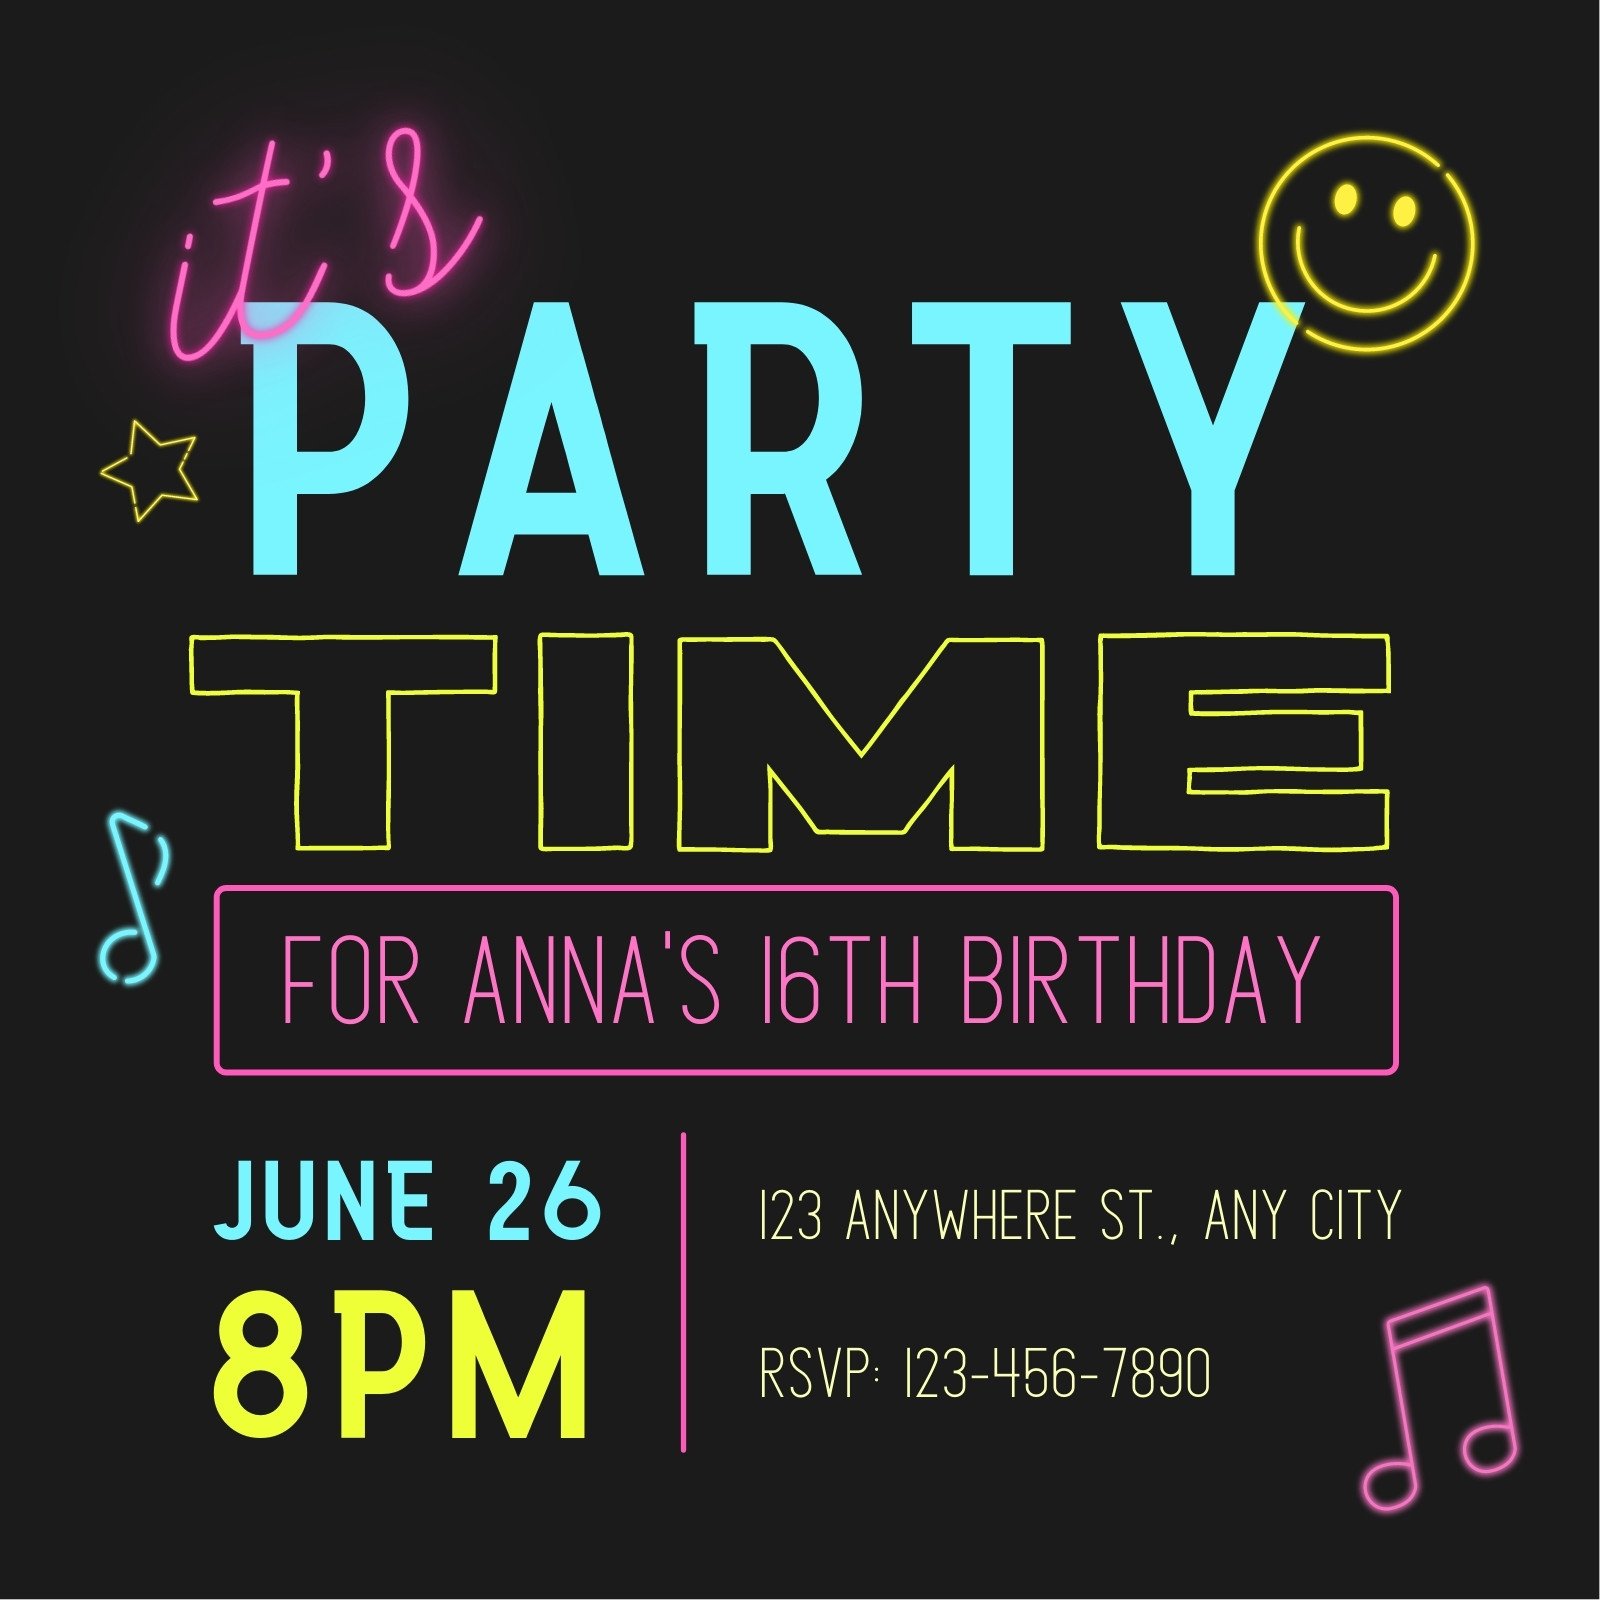 Free, printable, customizable party invitation templates | Canva